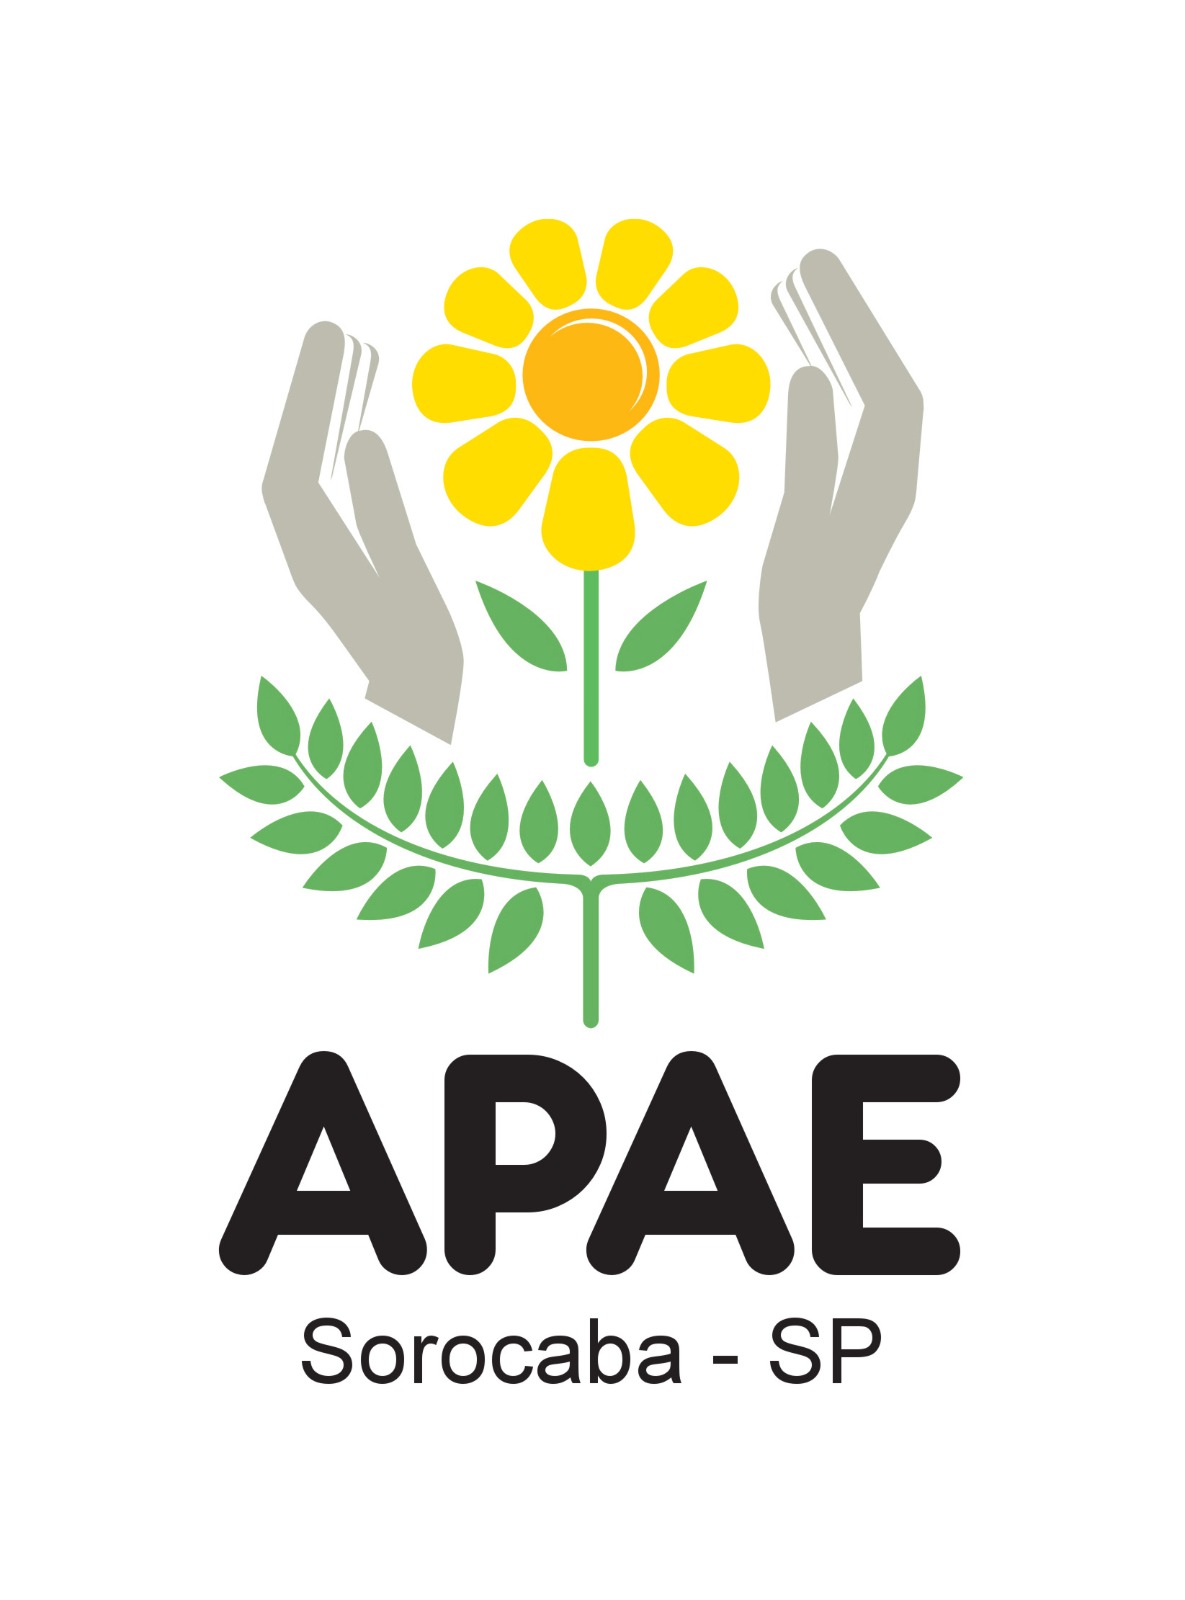 APAE Sorocaba